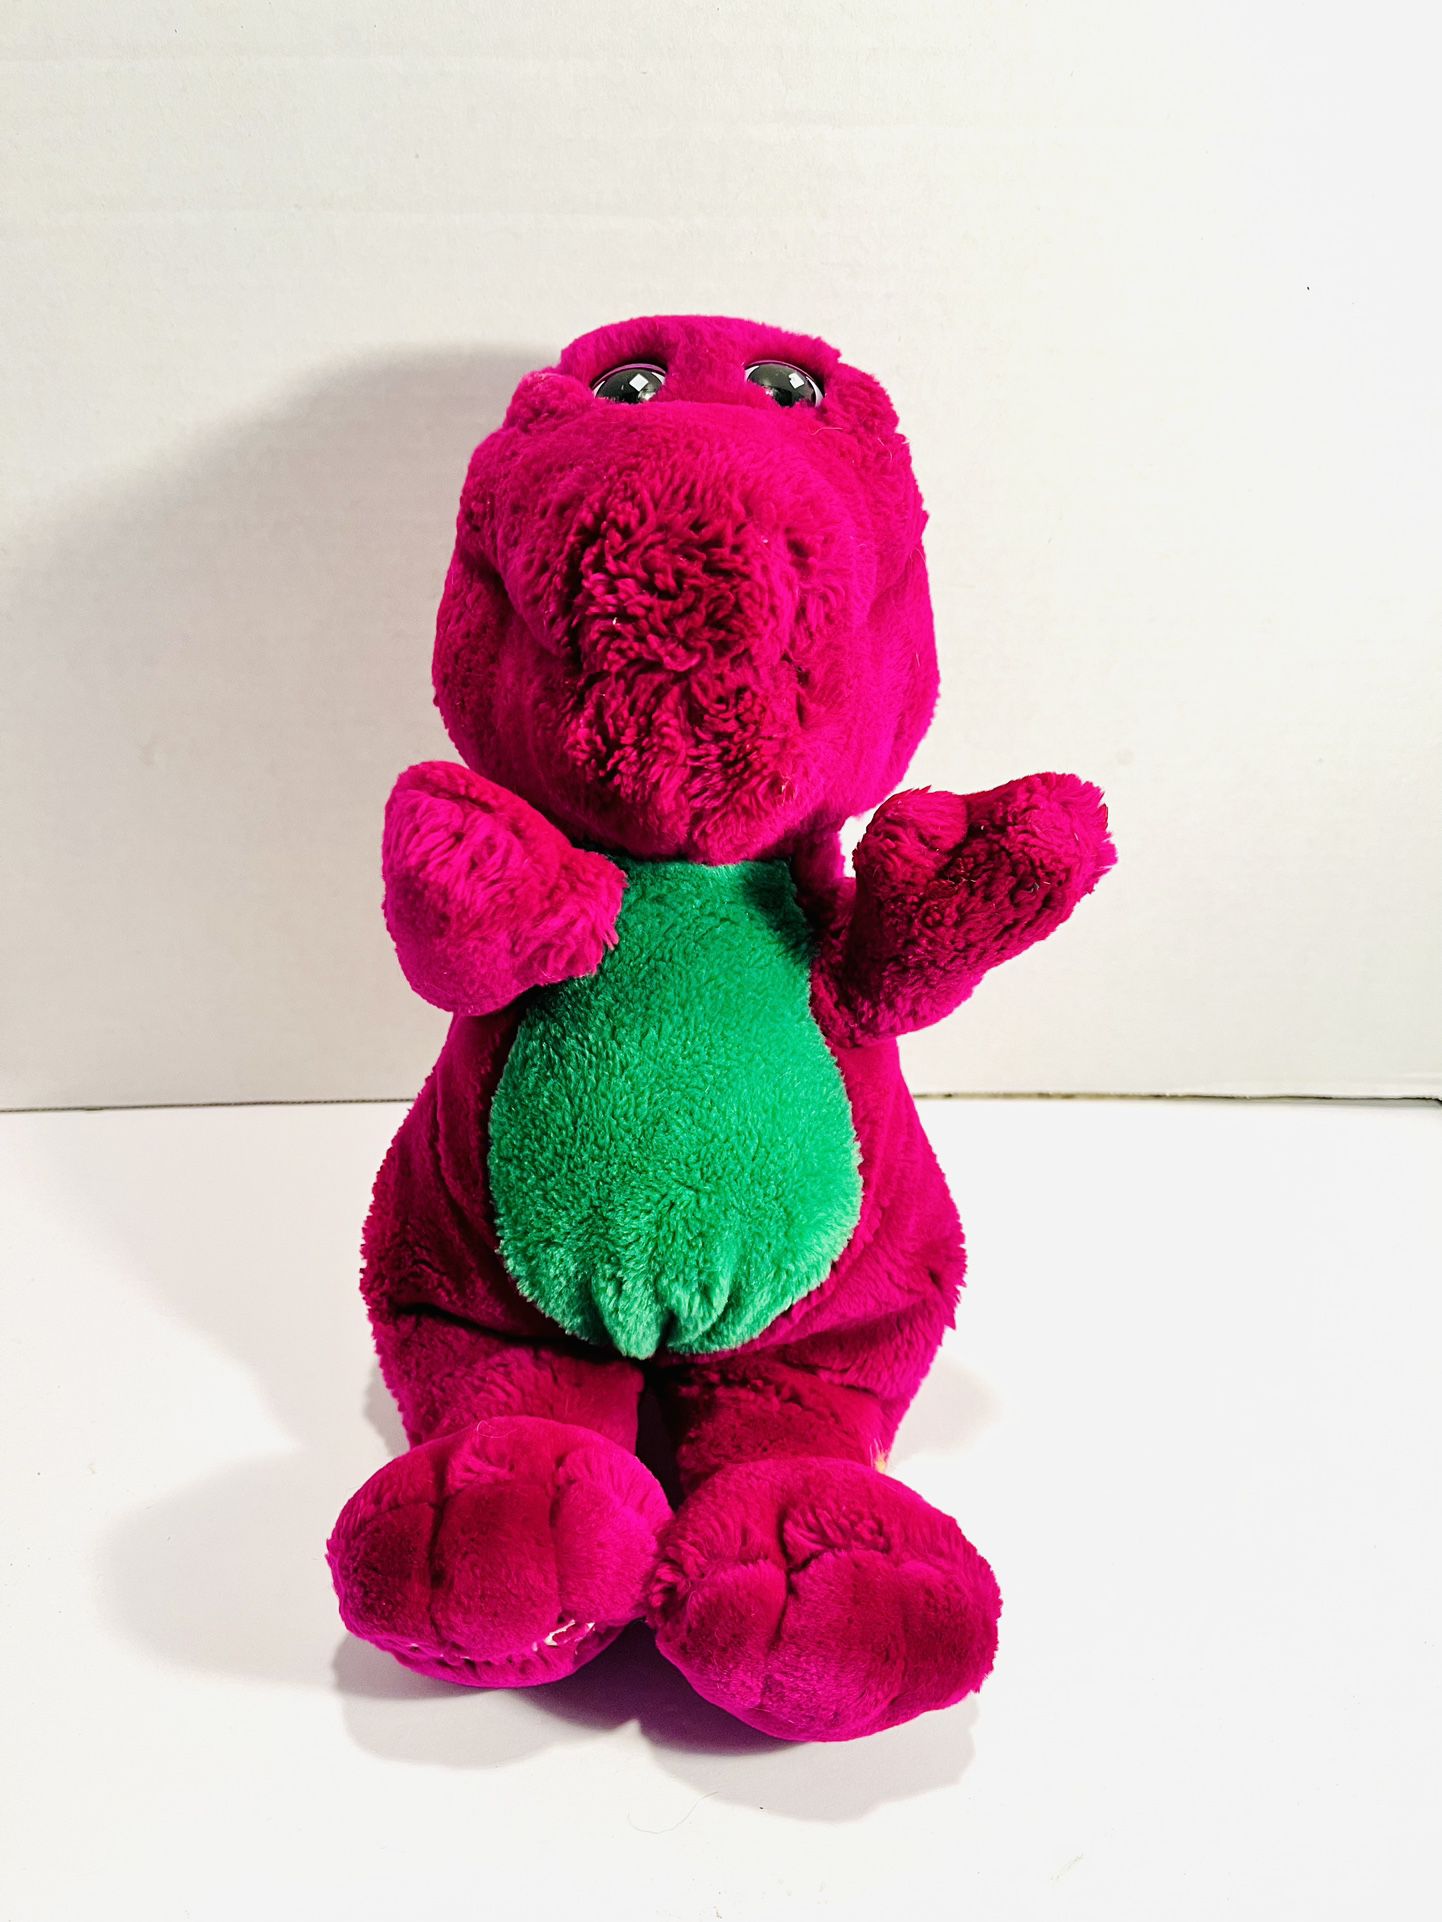 VINTAGE 1992 Barney the Purple Dinosaur The Lyons Group 12”Stuffed Animal Plush